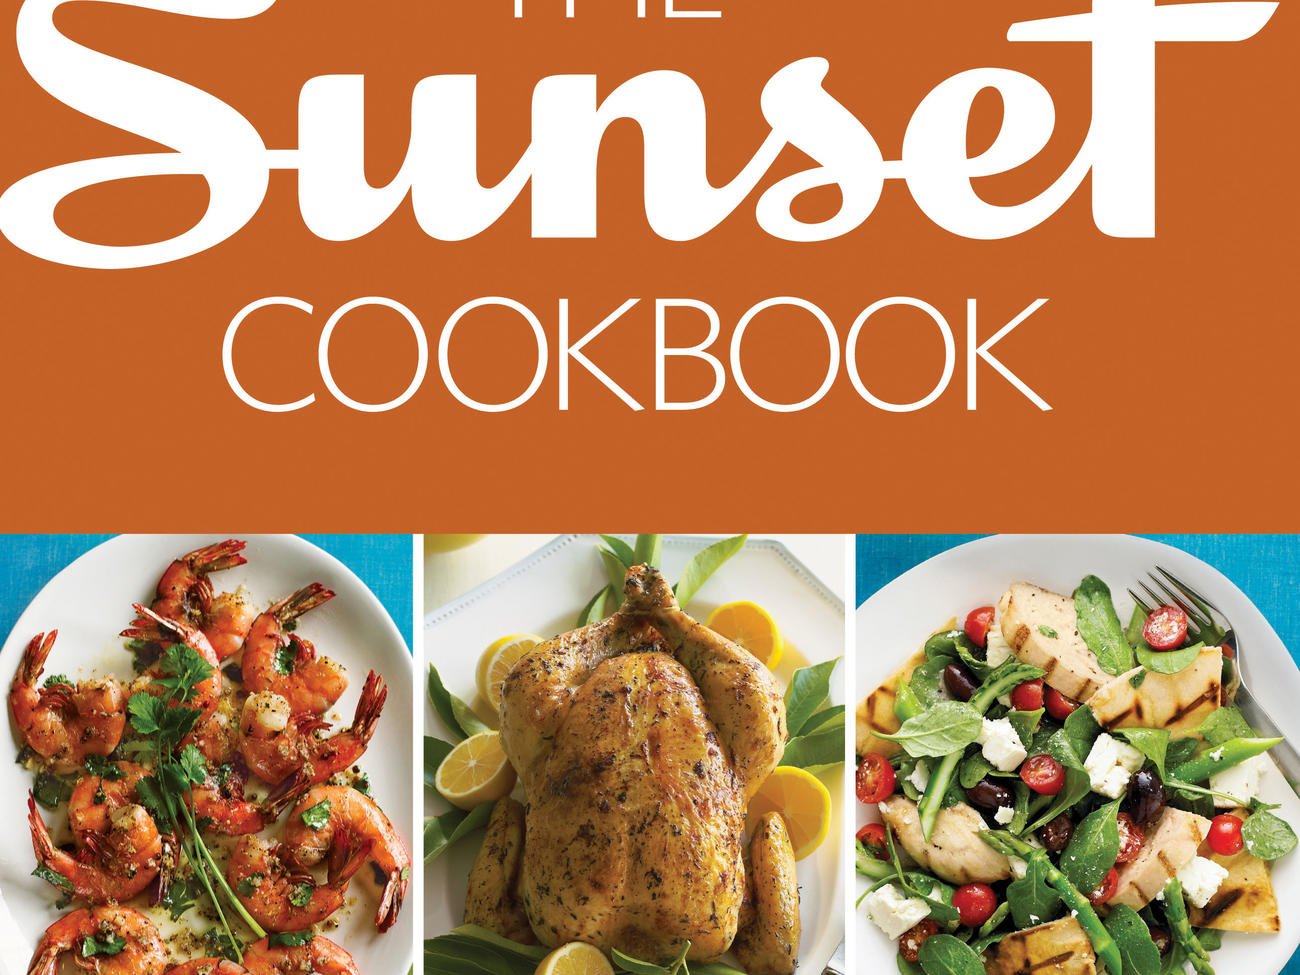 The Sunset Cookbook